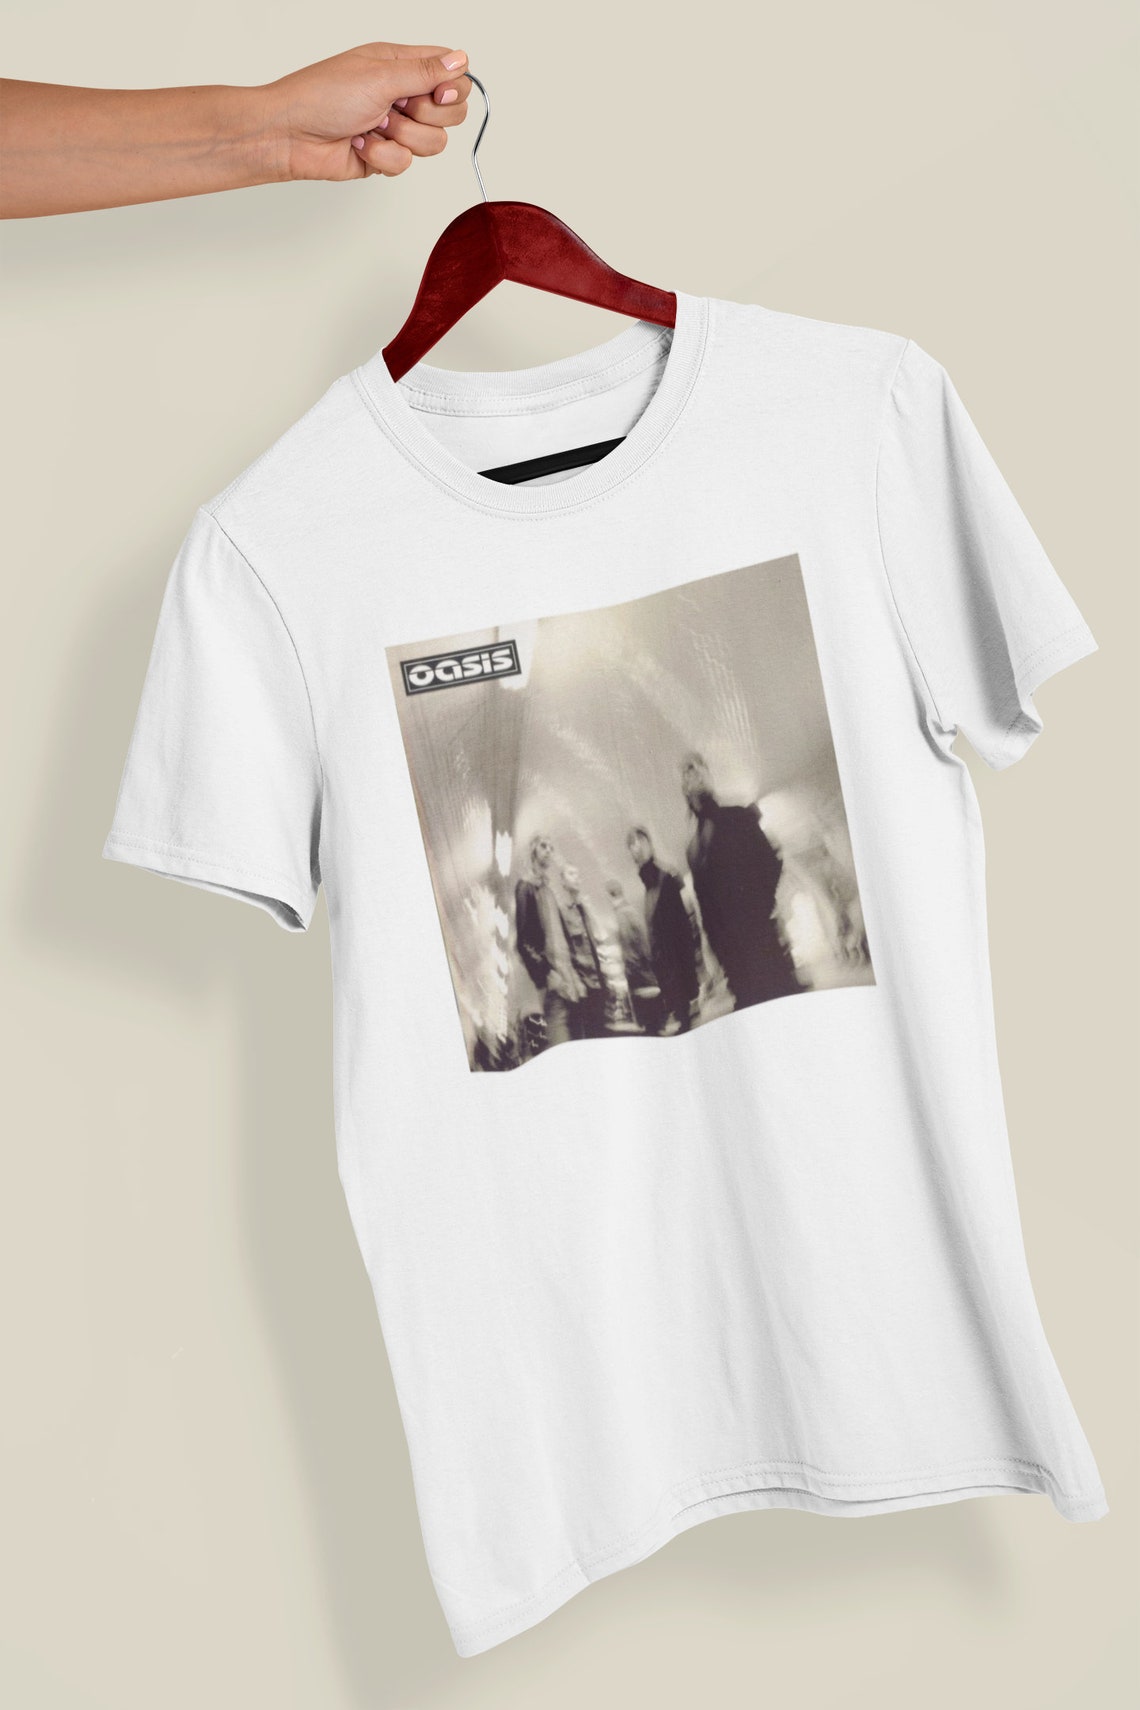 Oasis Vintage style T-shirt Oasis shirt Oasis band tee | Etsy